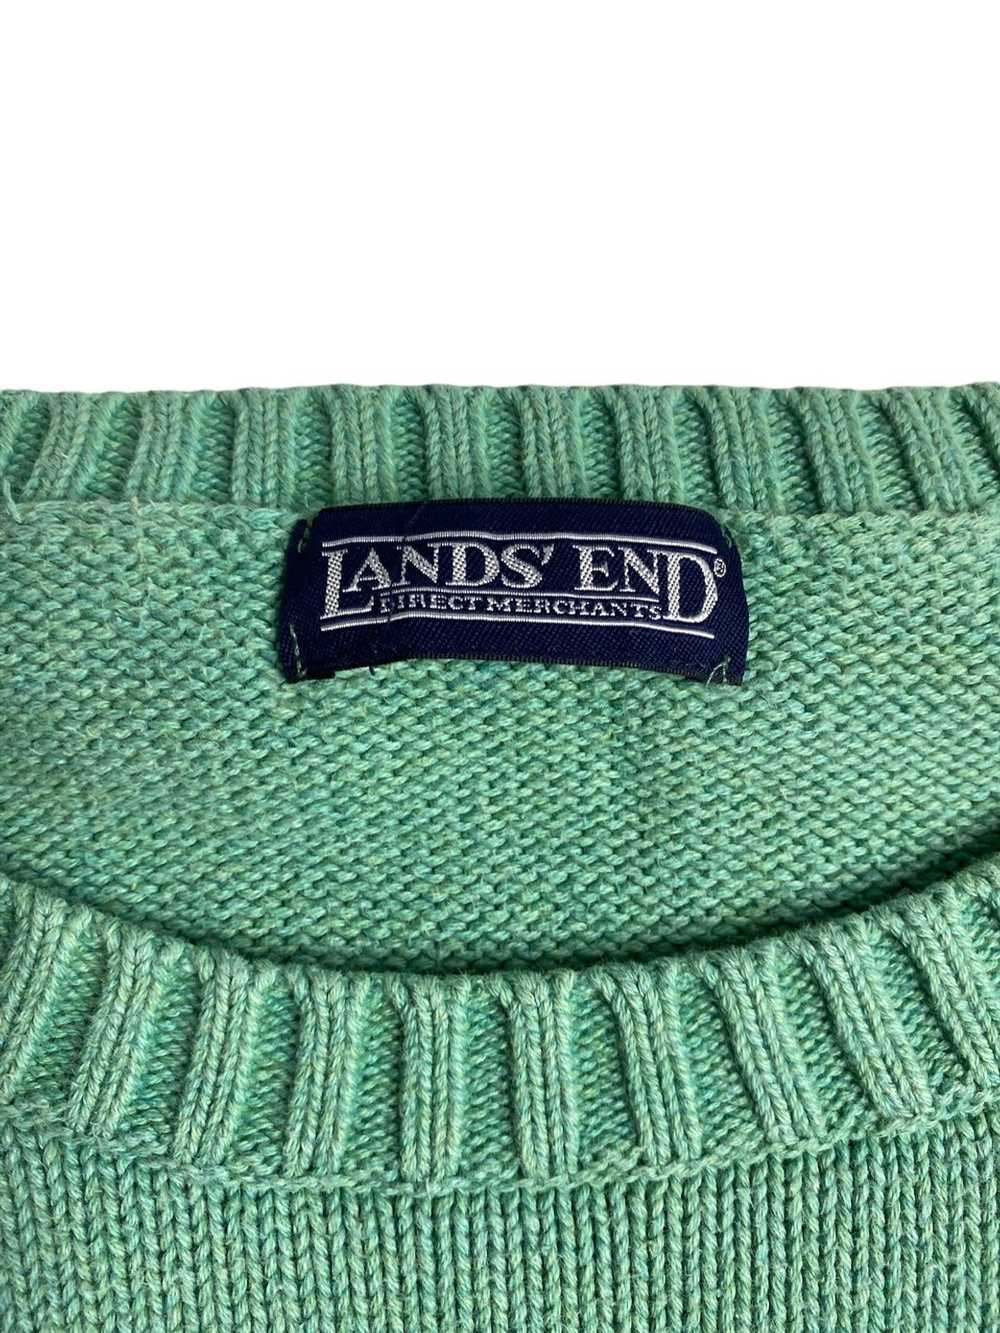 Lands End × Vintage Land’s End knitted sweater - image 3